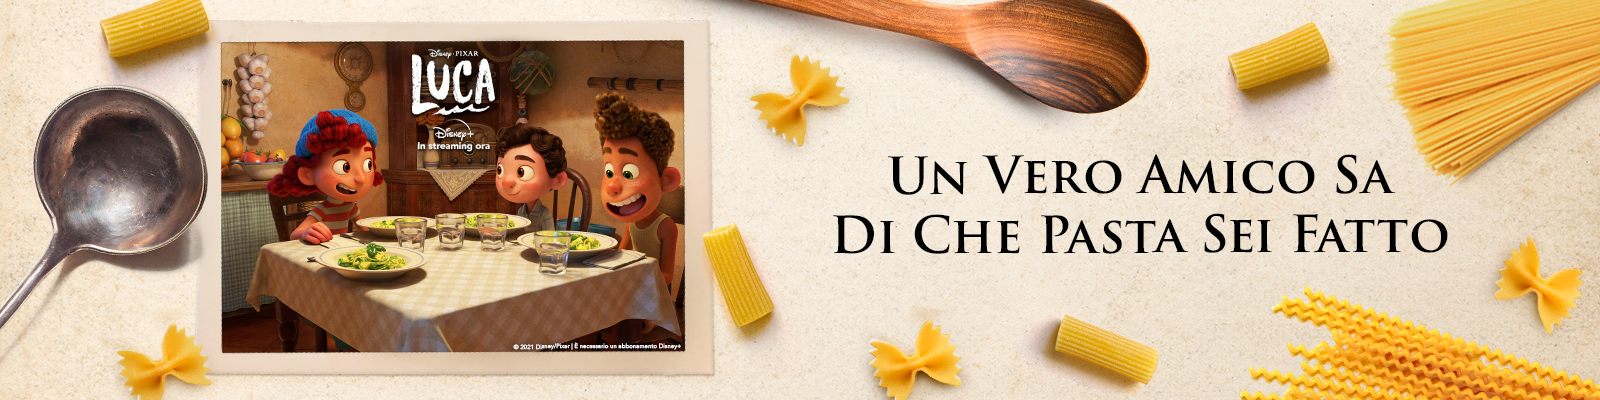 Pasta Garofalo celebra The Taste of Italian Summer con Luca, il nuovo film Disney e Pixar